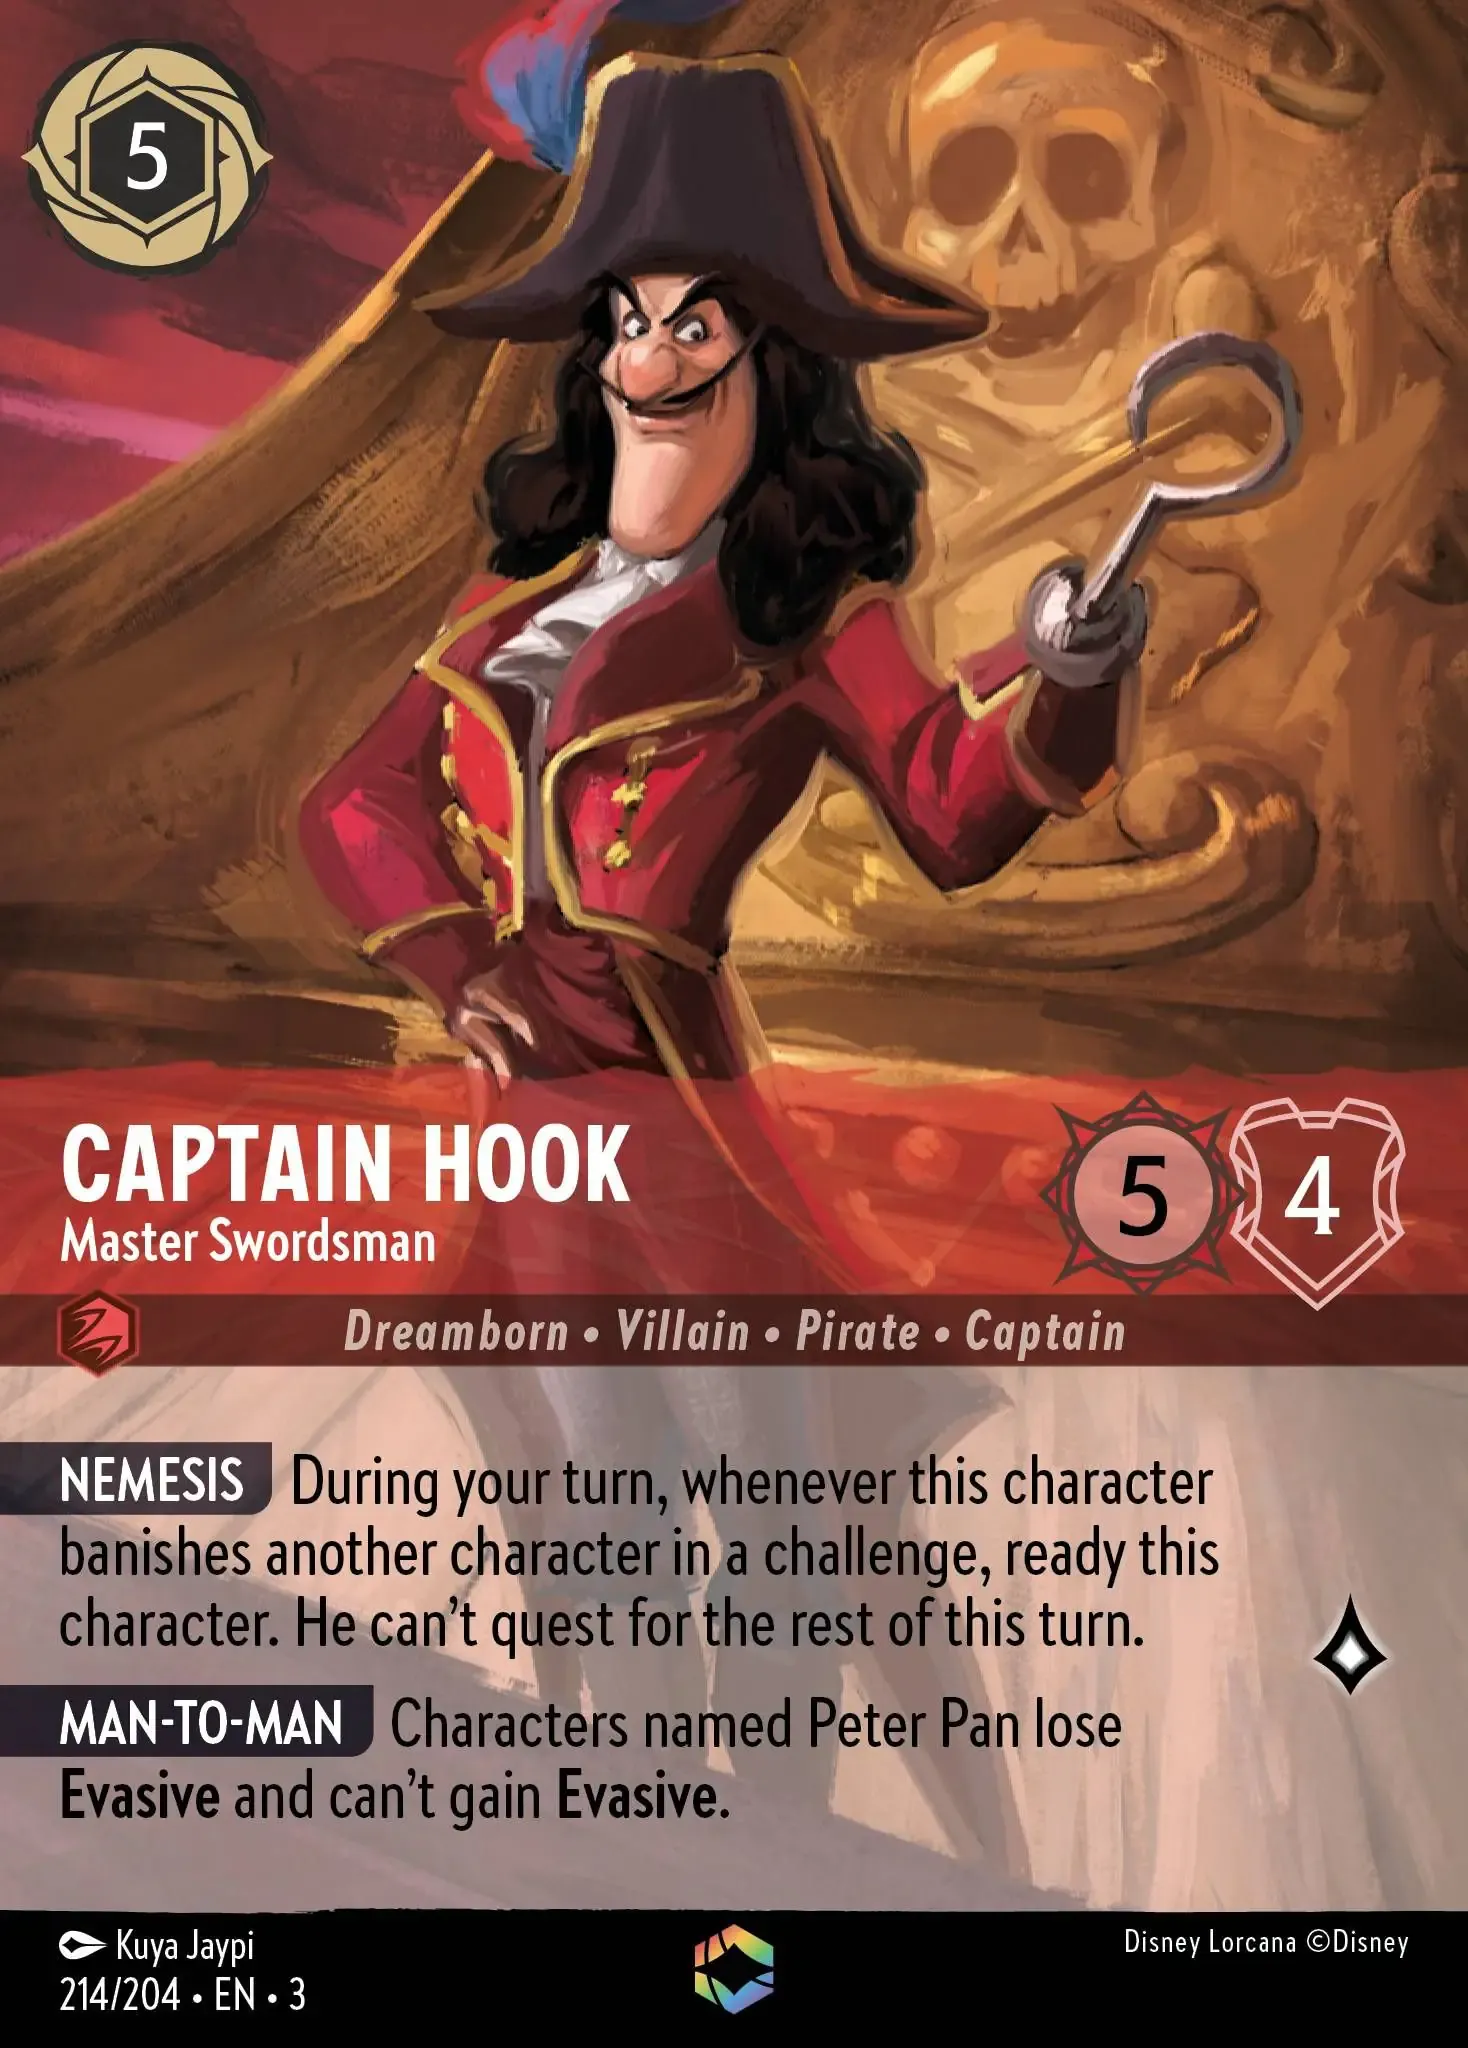 Captain Hook - Forceful Duelist Lorcana Card